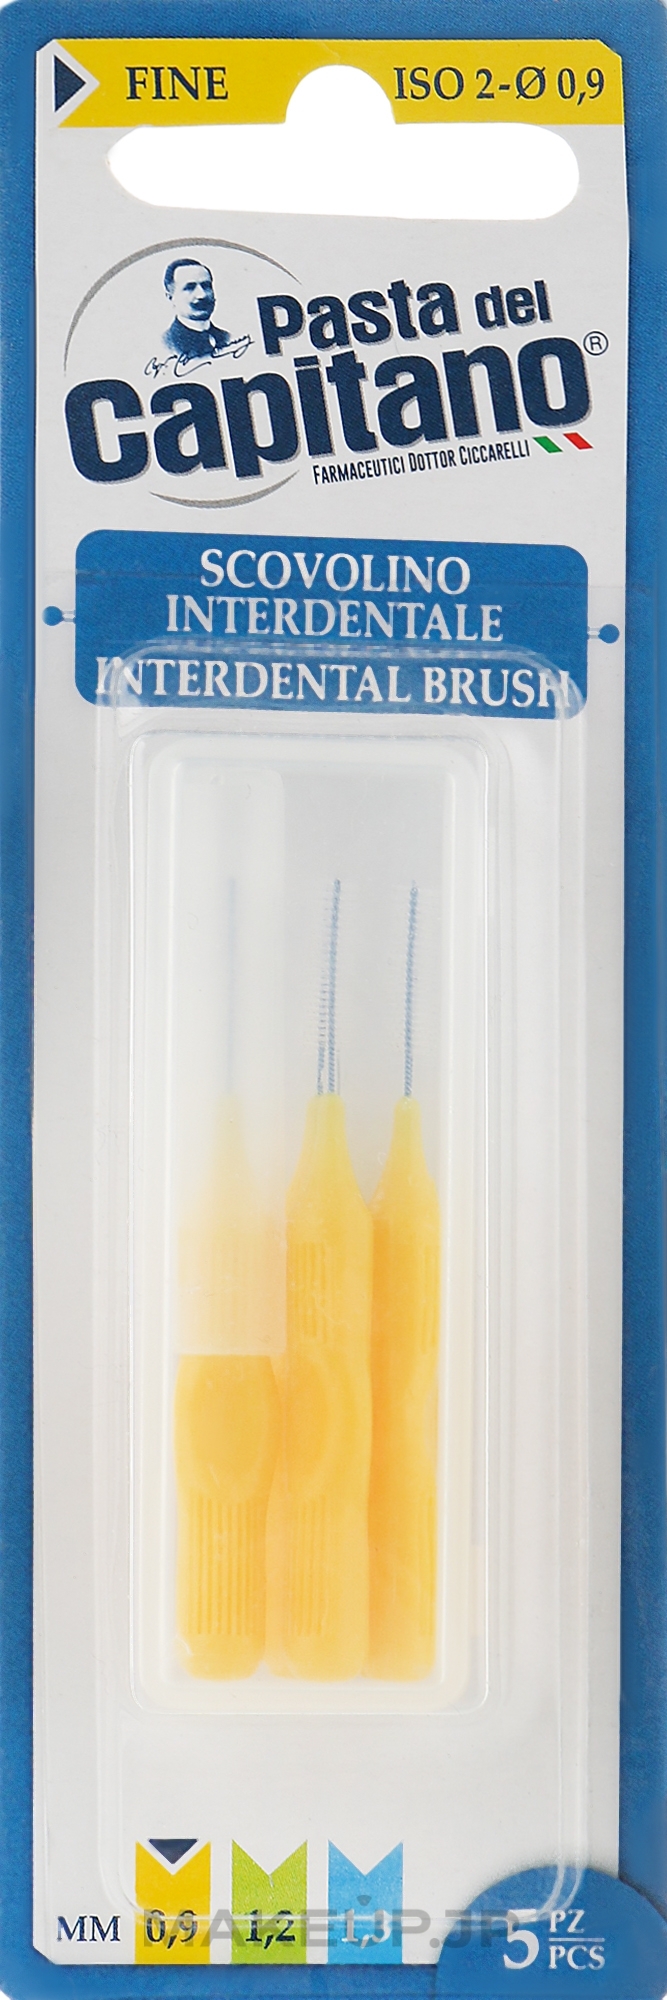 Interdental Brushes Set, yellow - Pasta Del Capitano Interdental Brush Fine 0.9 mm — photo 5 szt.